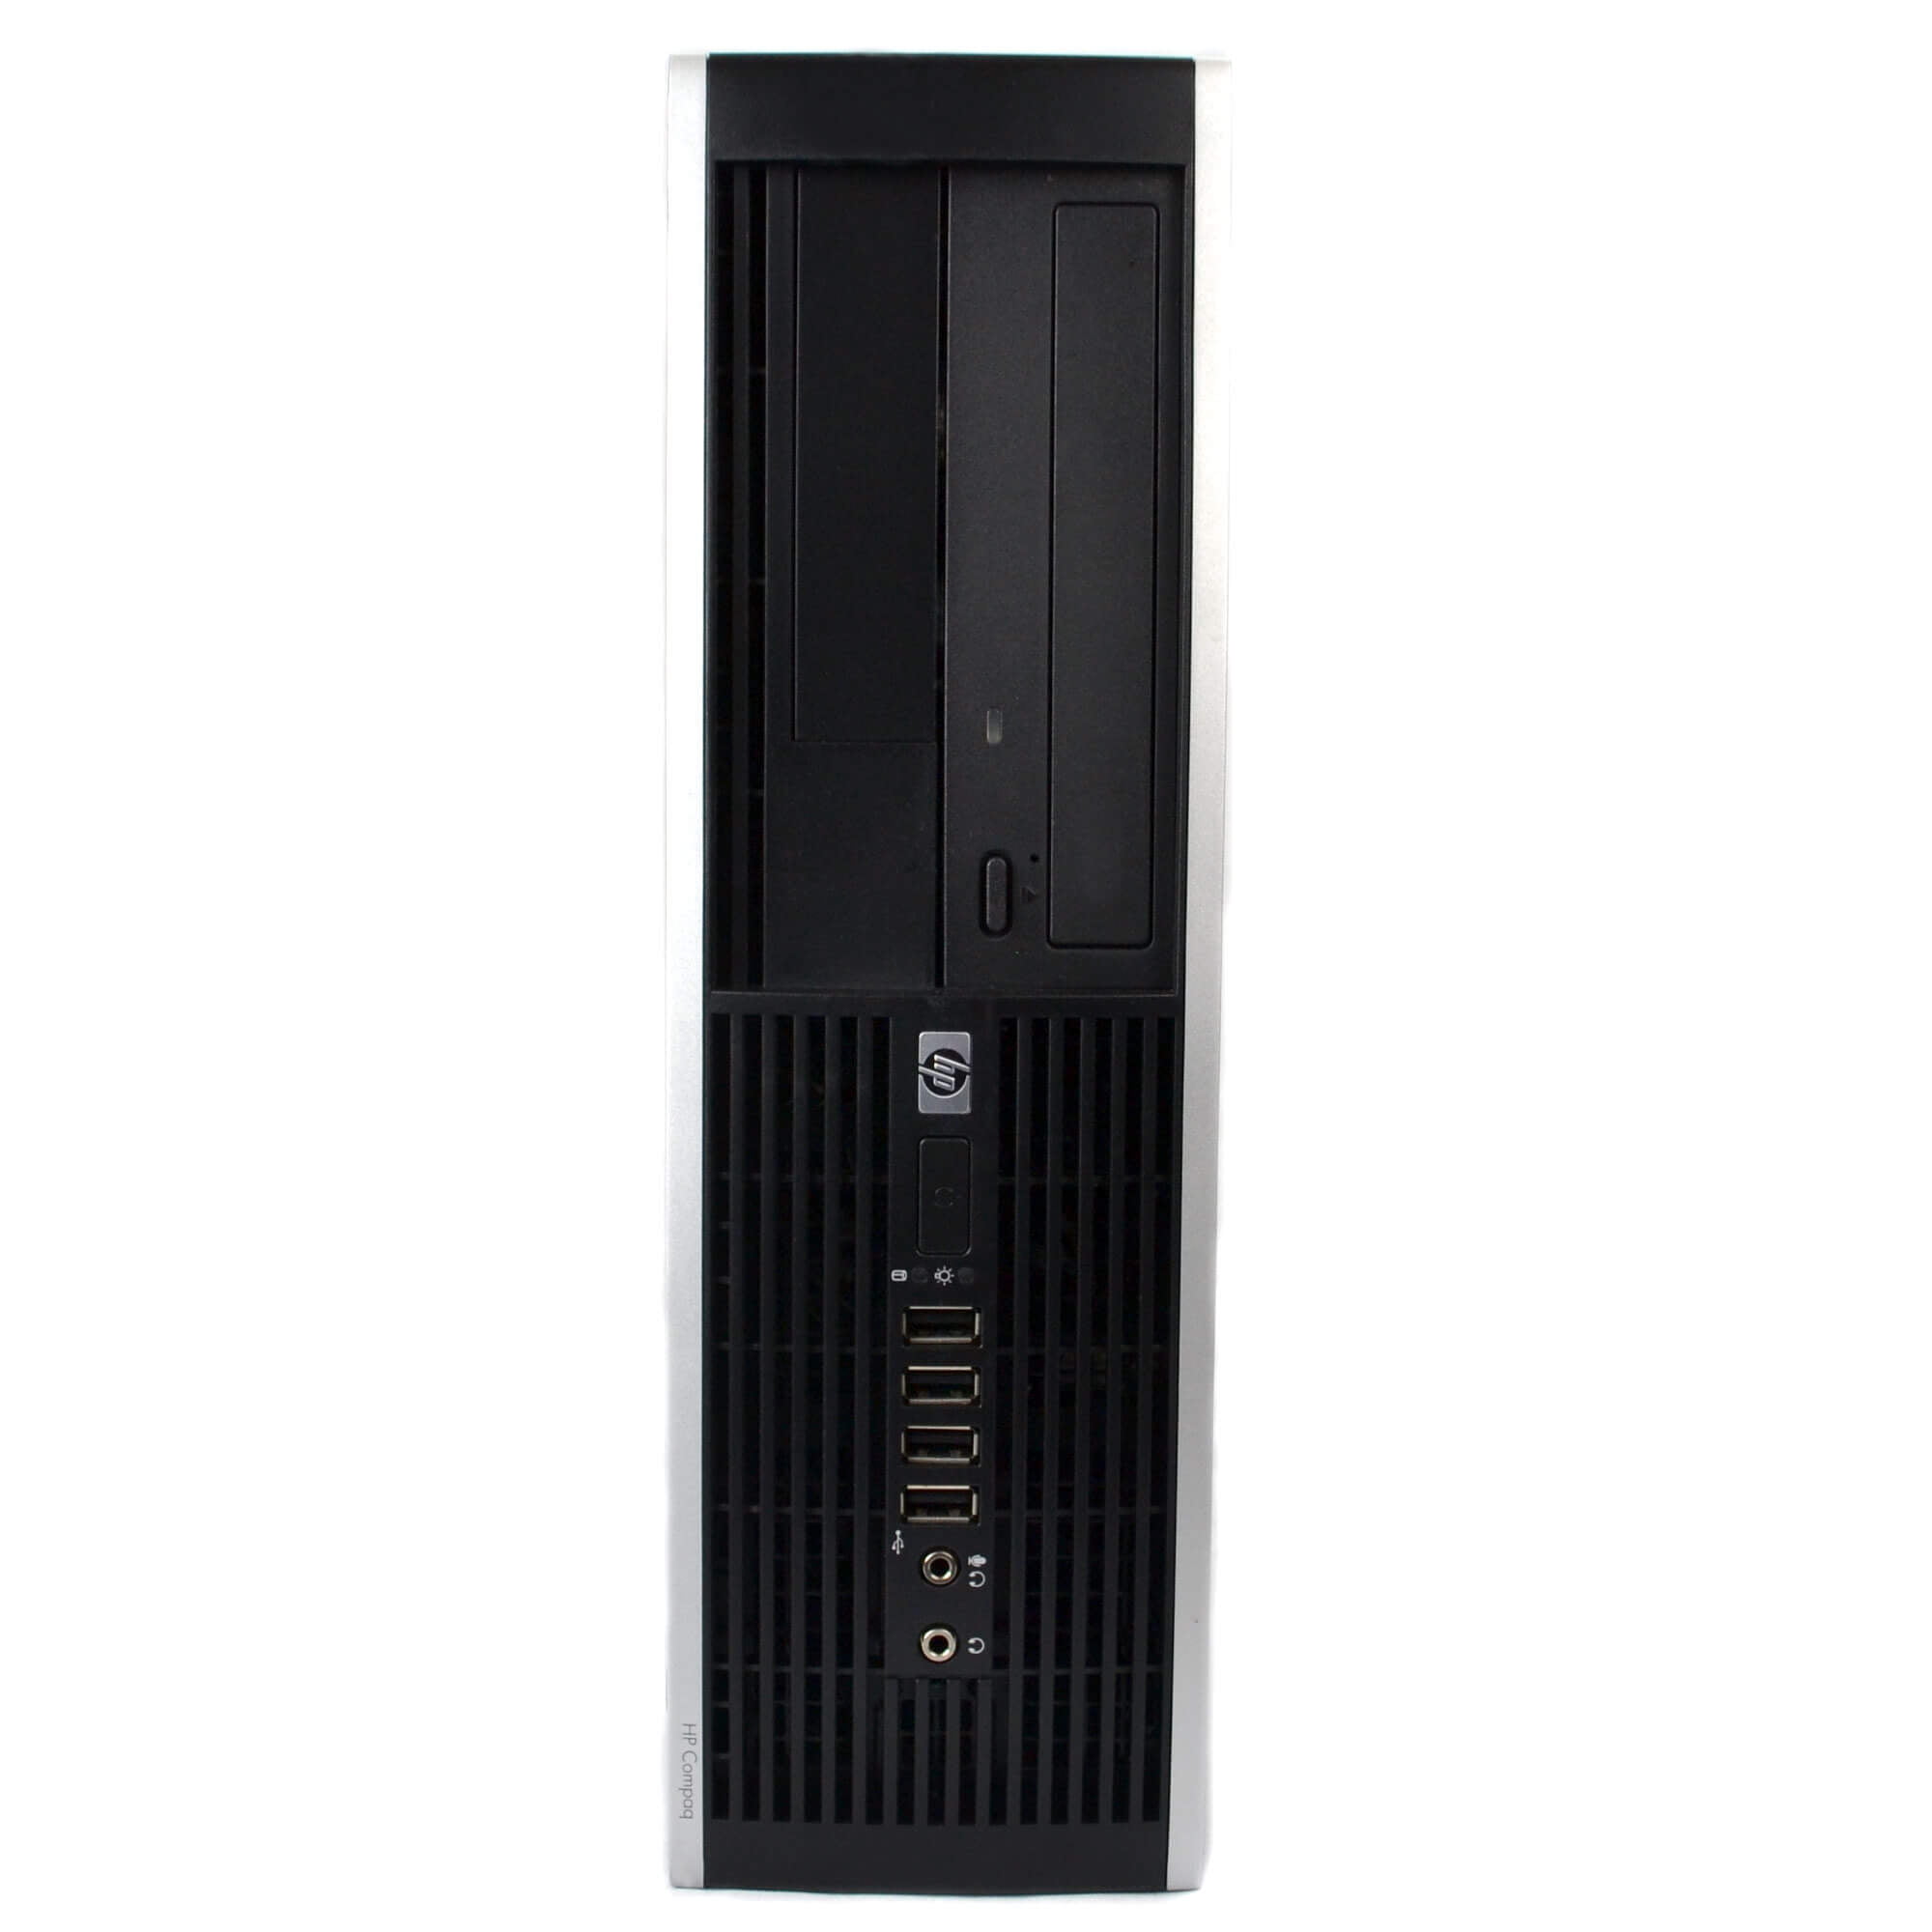 HP Compaq 6000 Pro Desktop Intel Core 2 Duo 3.0GHz 8GB RAM 1TB HDD